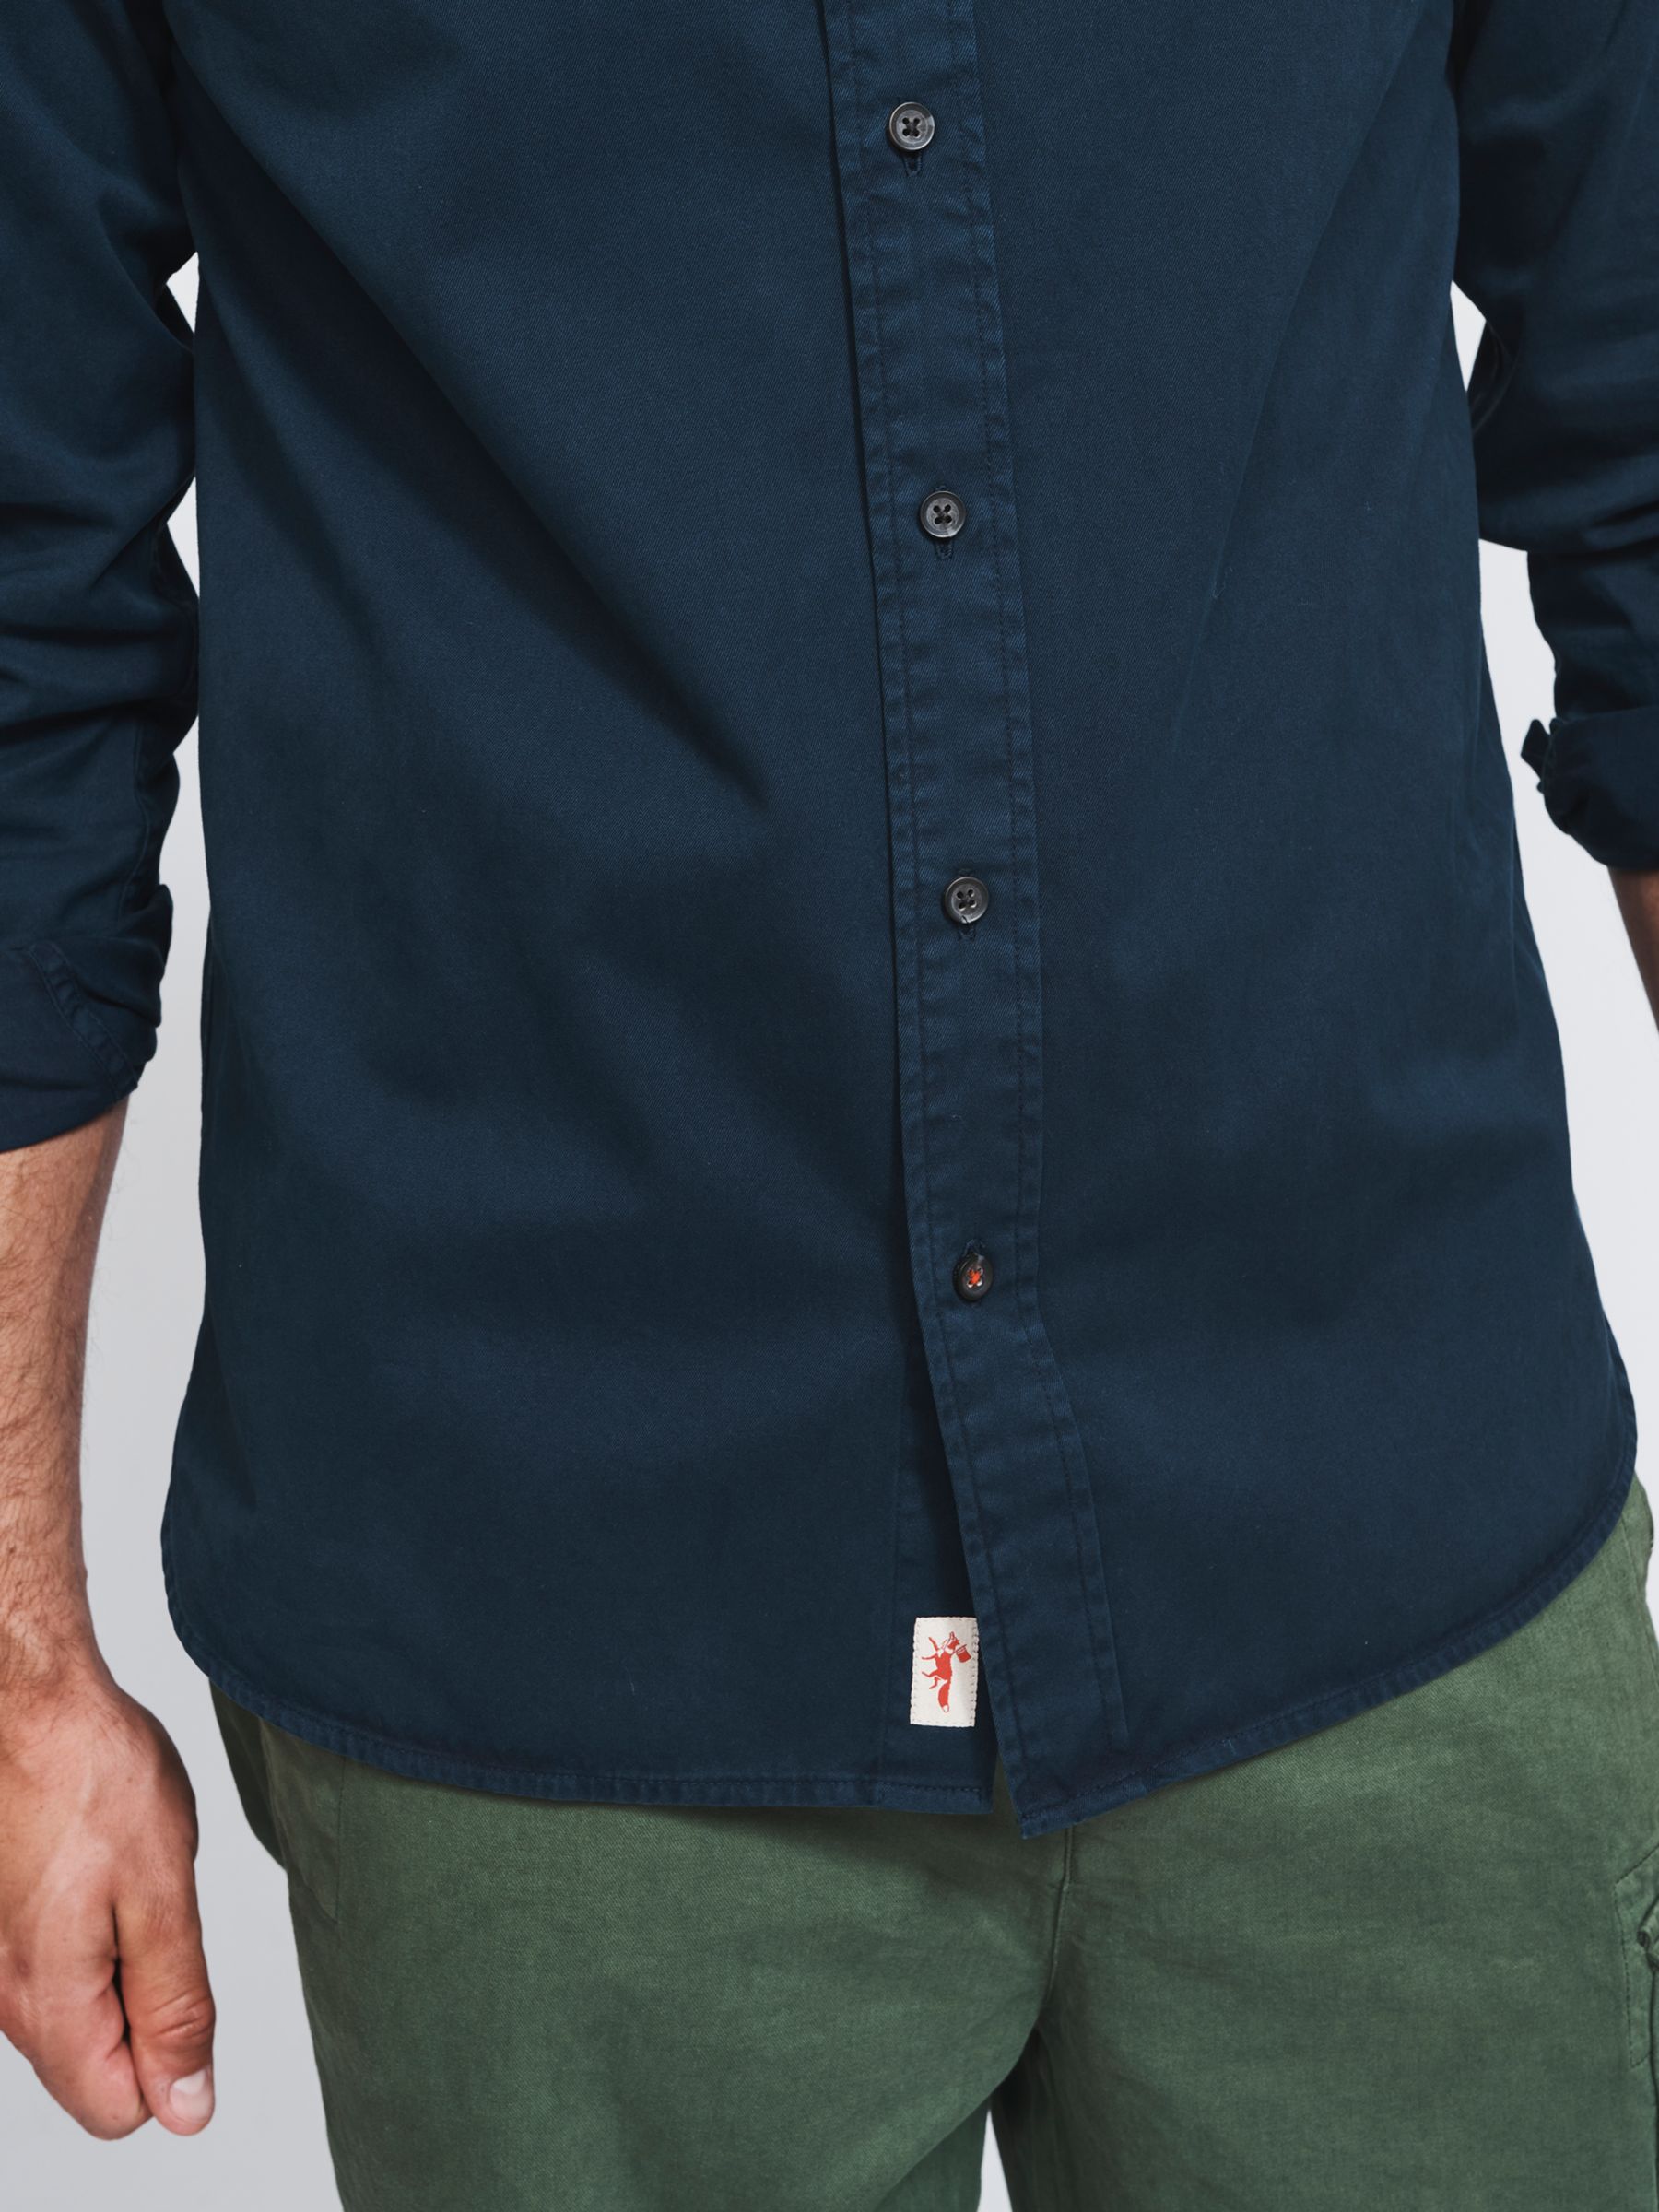 Aubin Hessle Garment Dyed Cotton Shirt, Navy, S